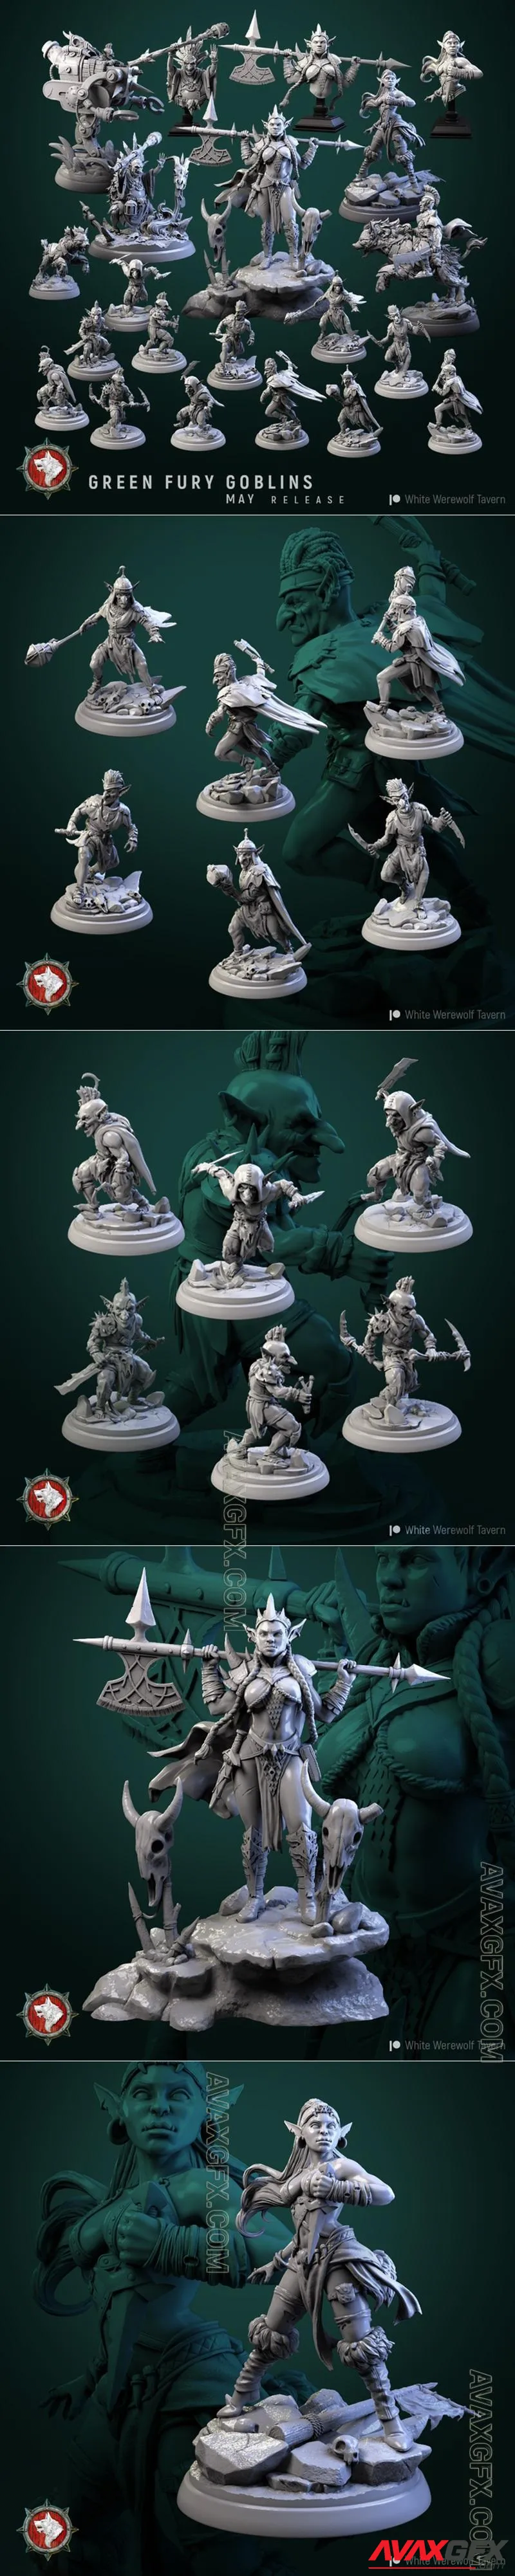 White Werewolf Tavern - Green Fury Goblins - STL 3D Model